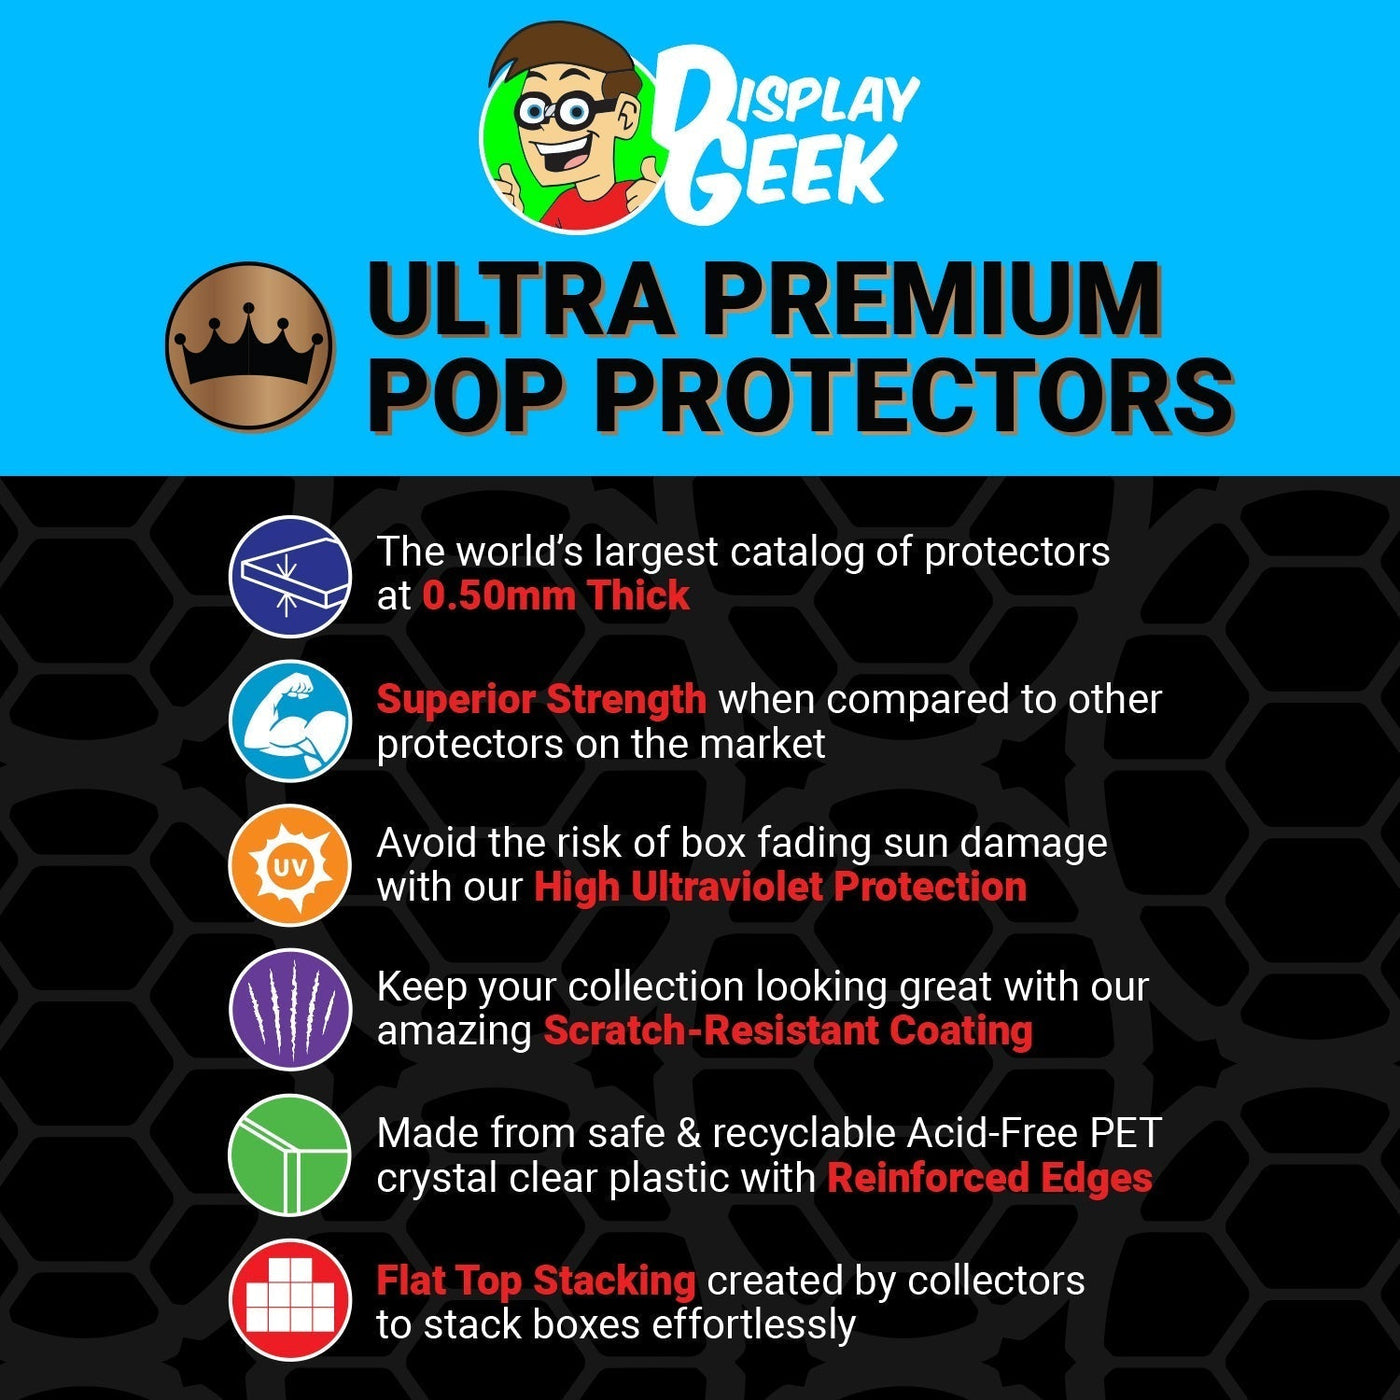 Pop Protector for 2 Pack The Joker & Harley Quinn Metallic Funko Pop on The Protector Guide App by Display Geek